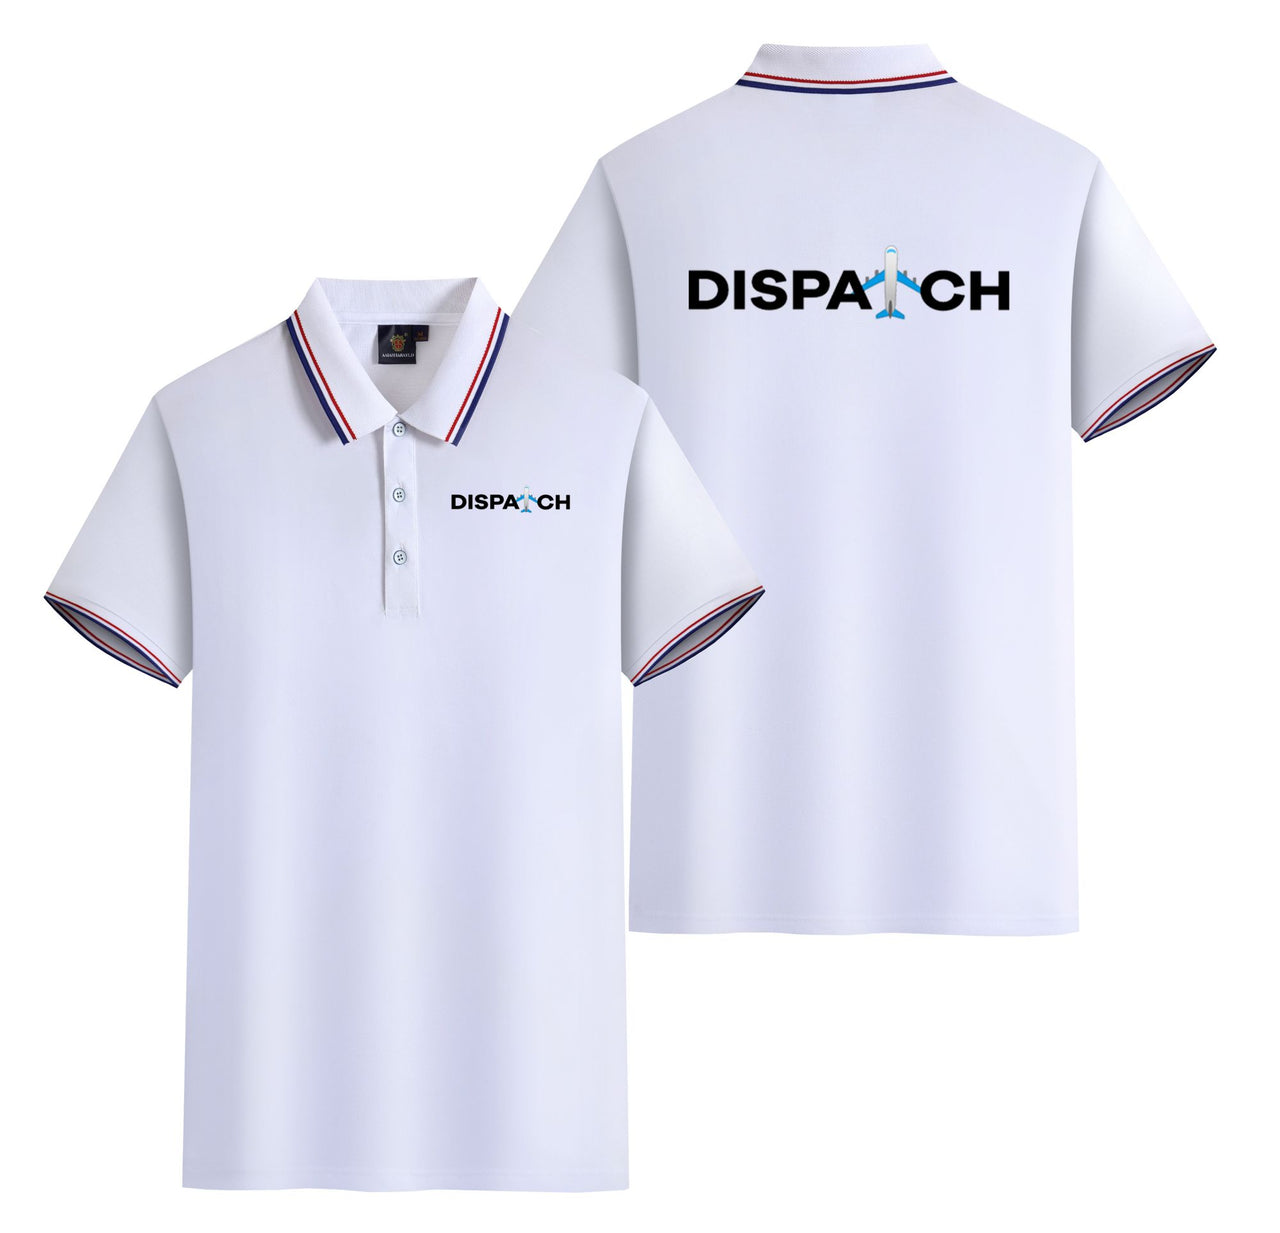 Dispatch Designed Stylish Polo T-Shirts (Double-Side)